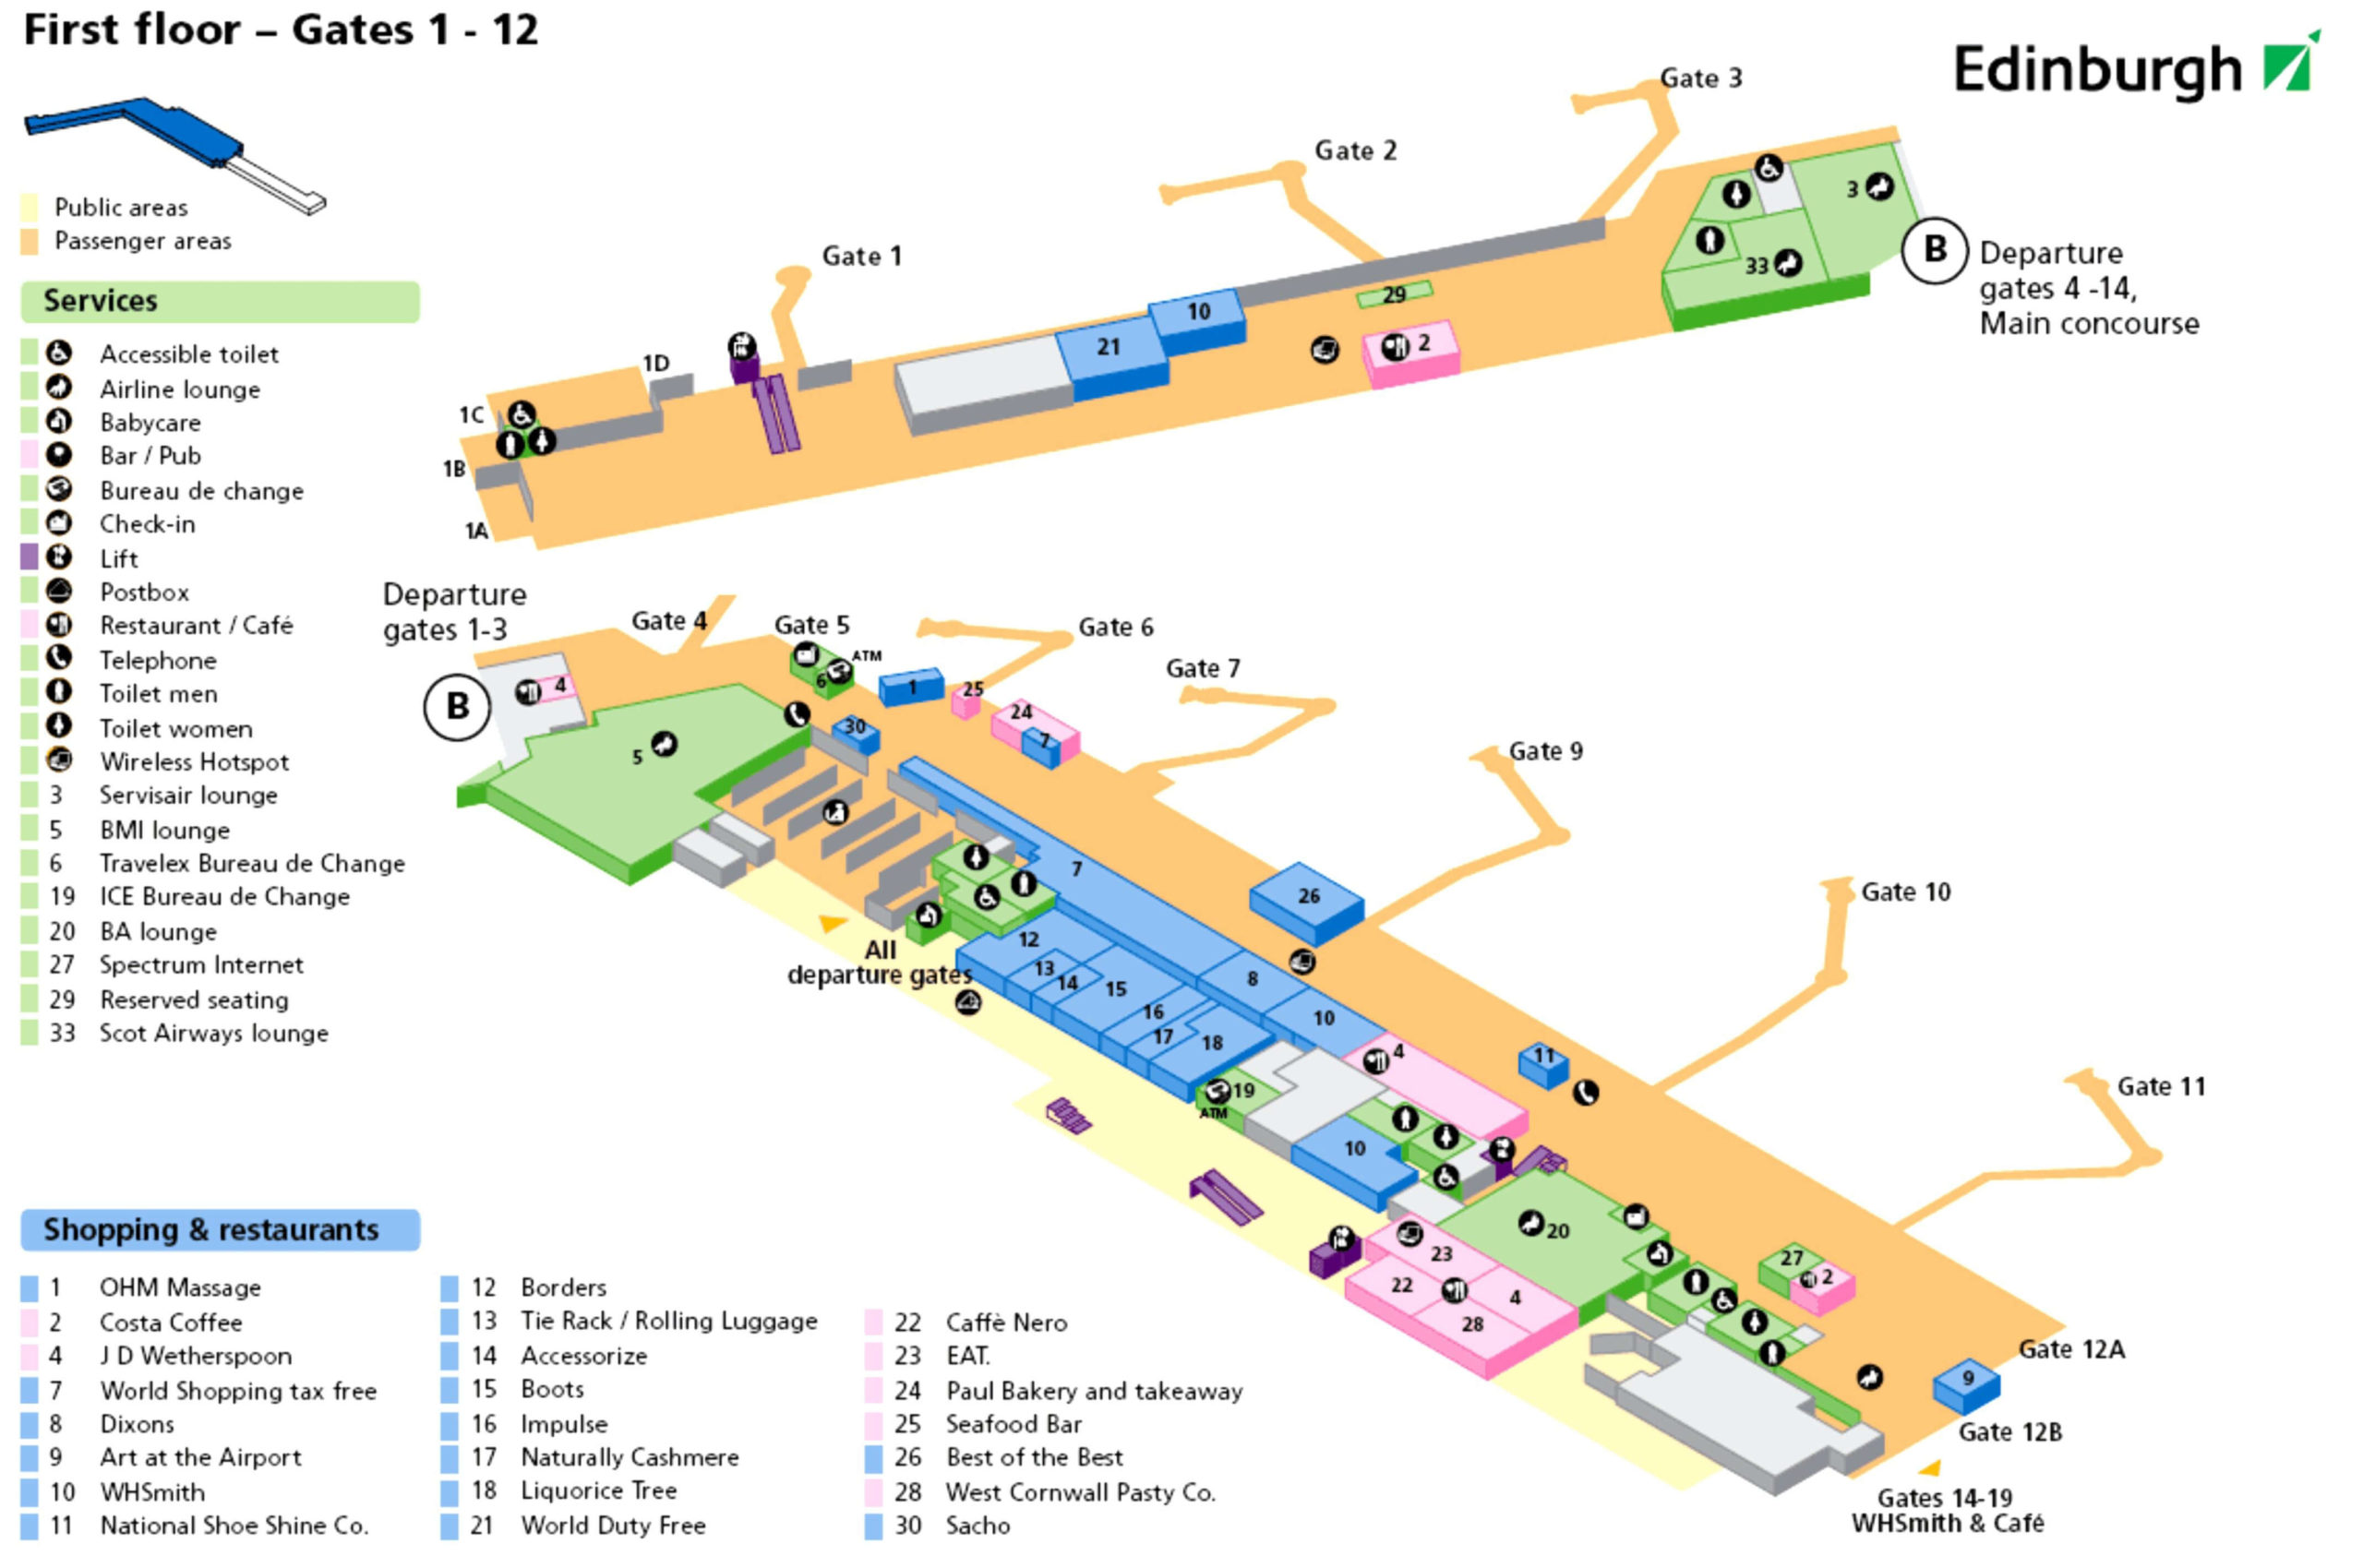 edinburgh airport gate map